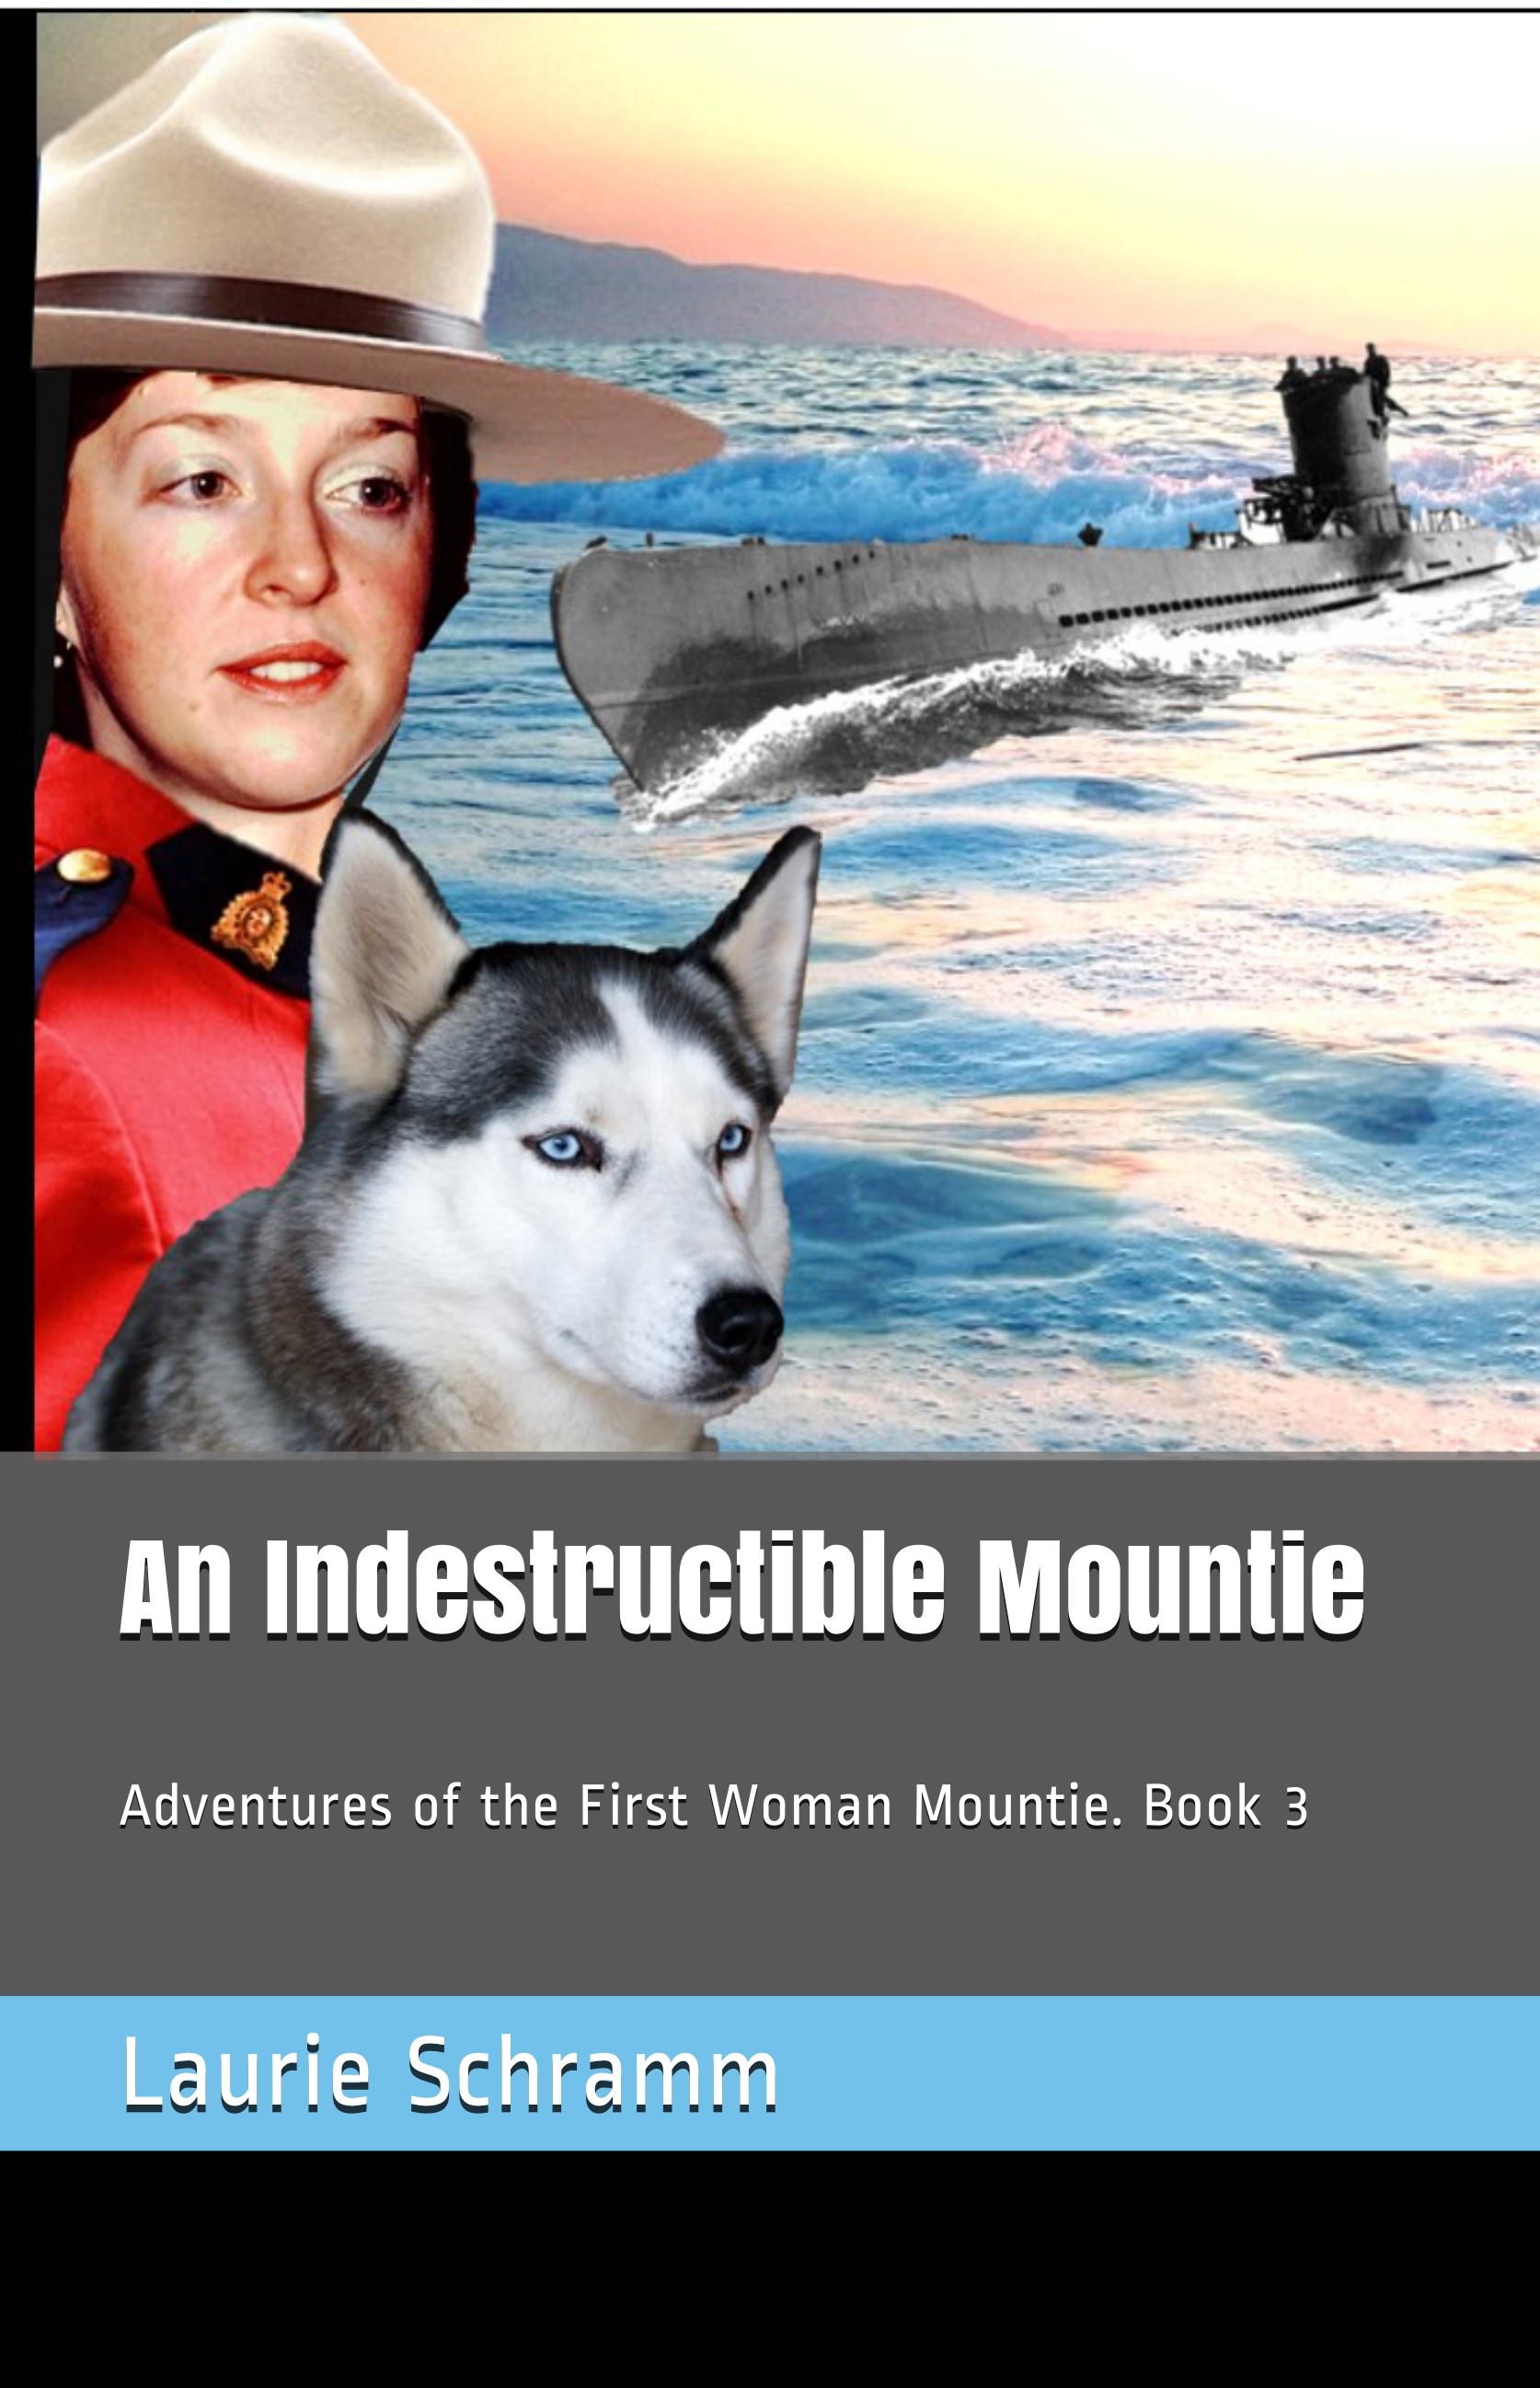 An Indestructible Mountie